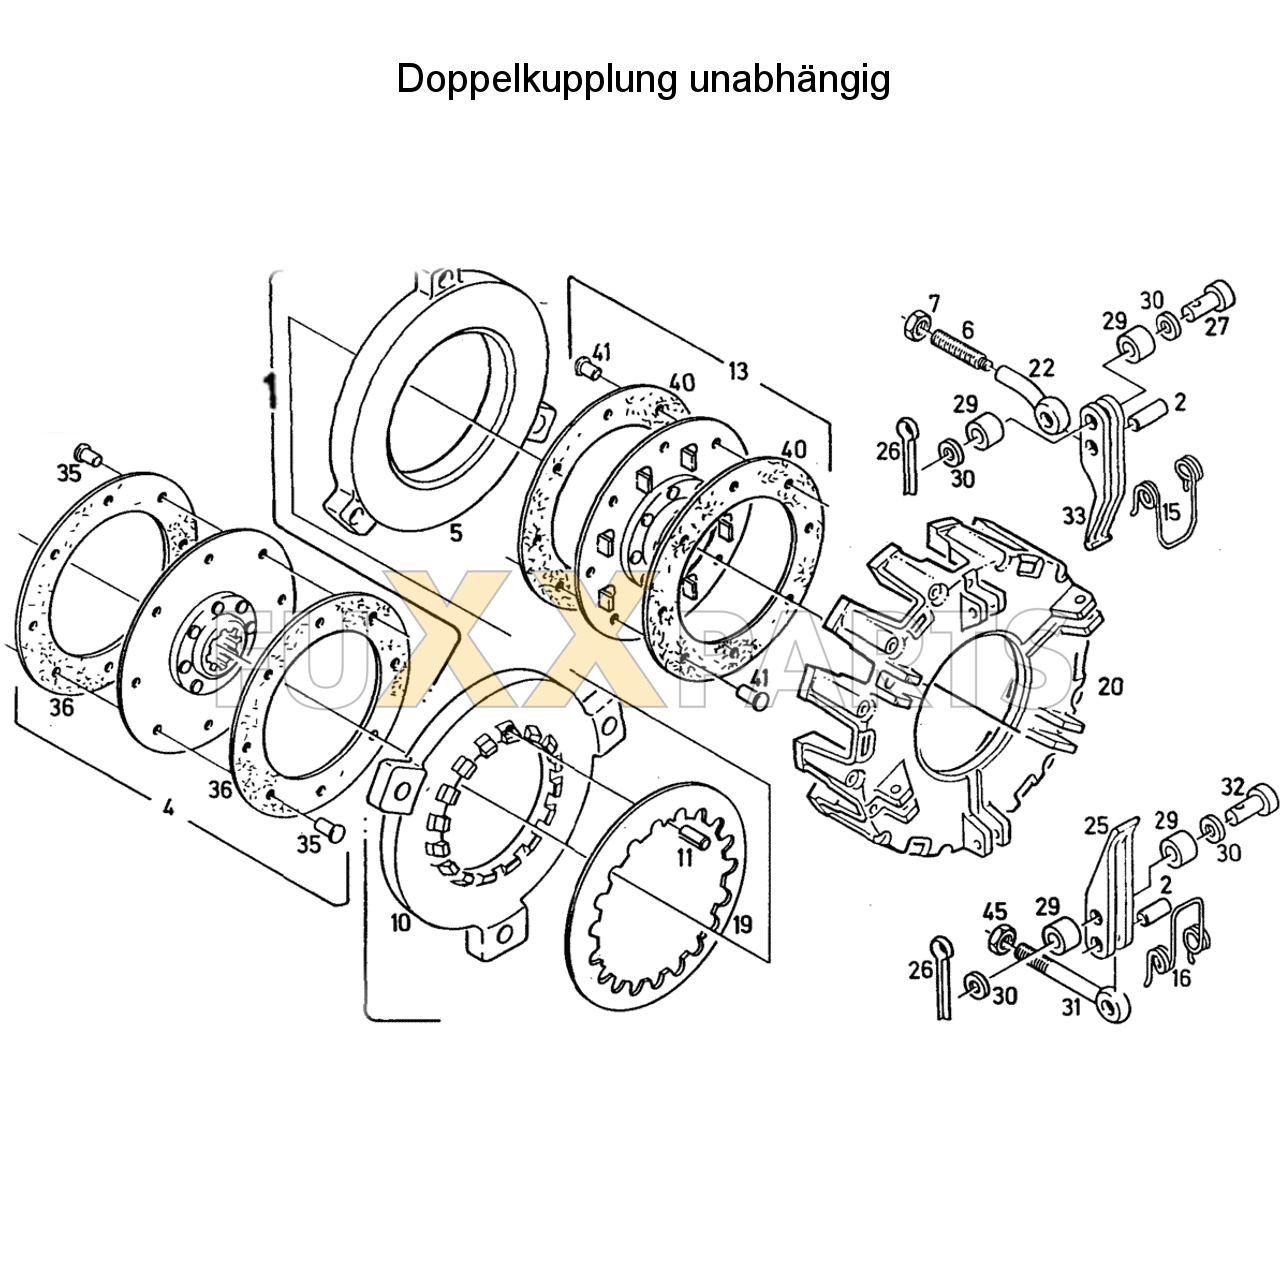 D 6007 C Doppelkupplung unabhängig